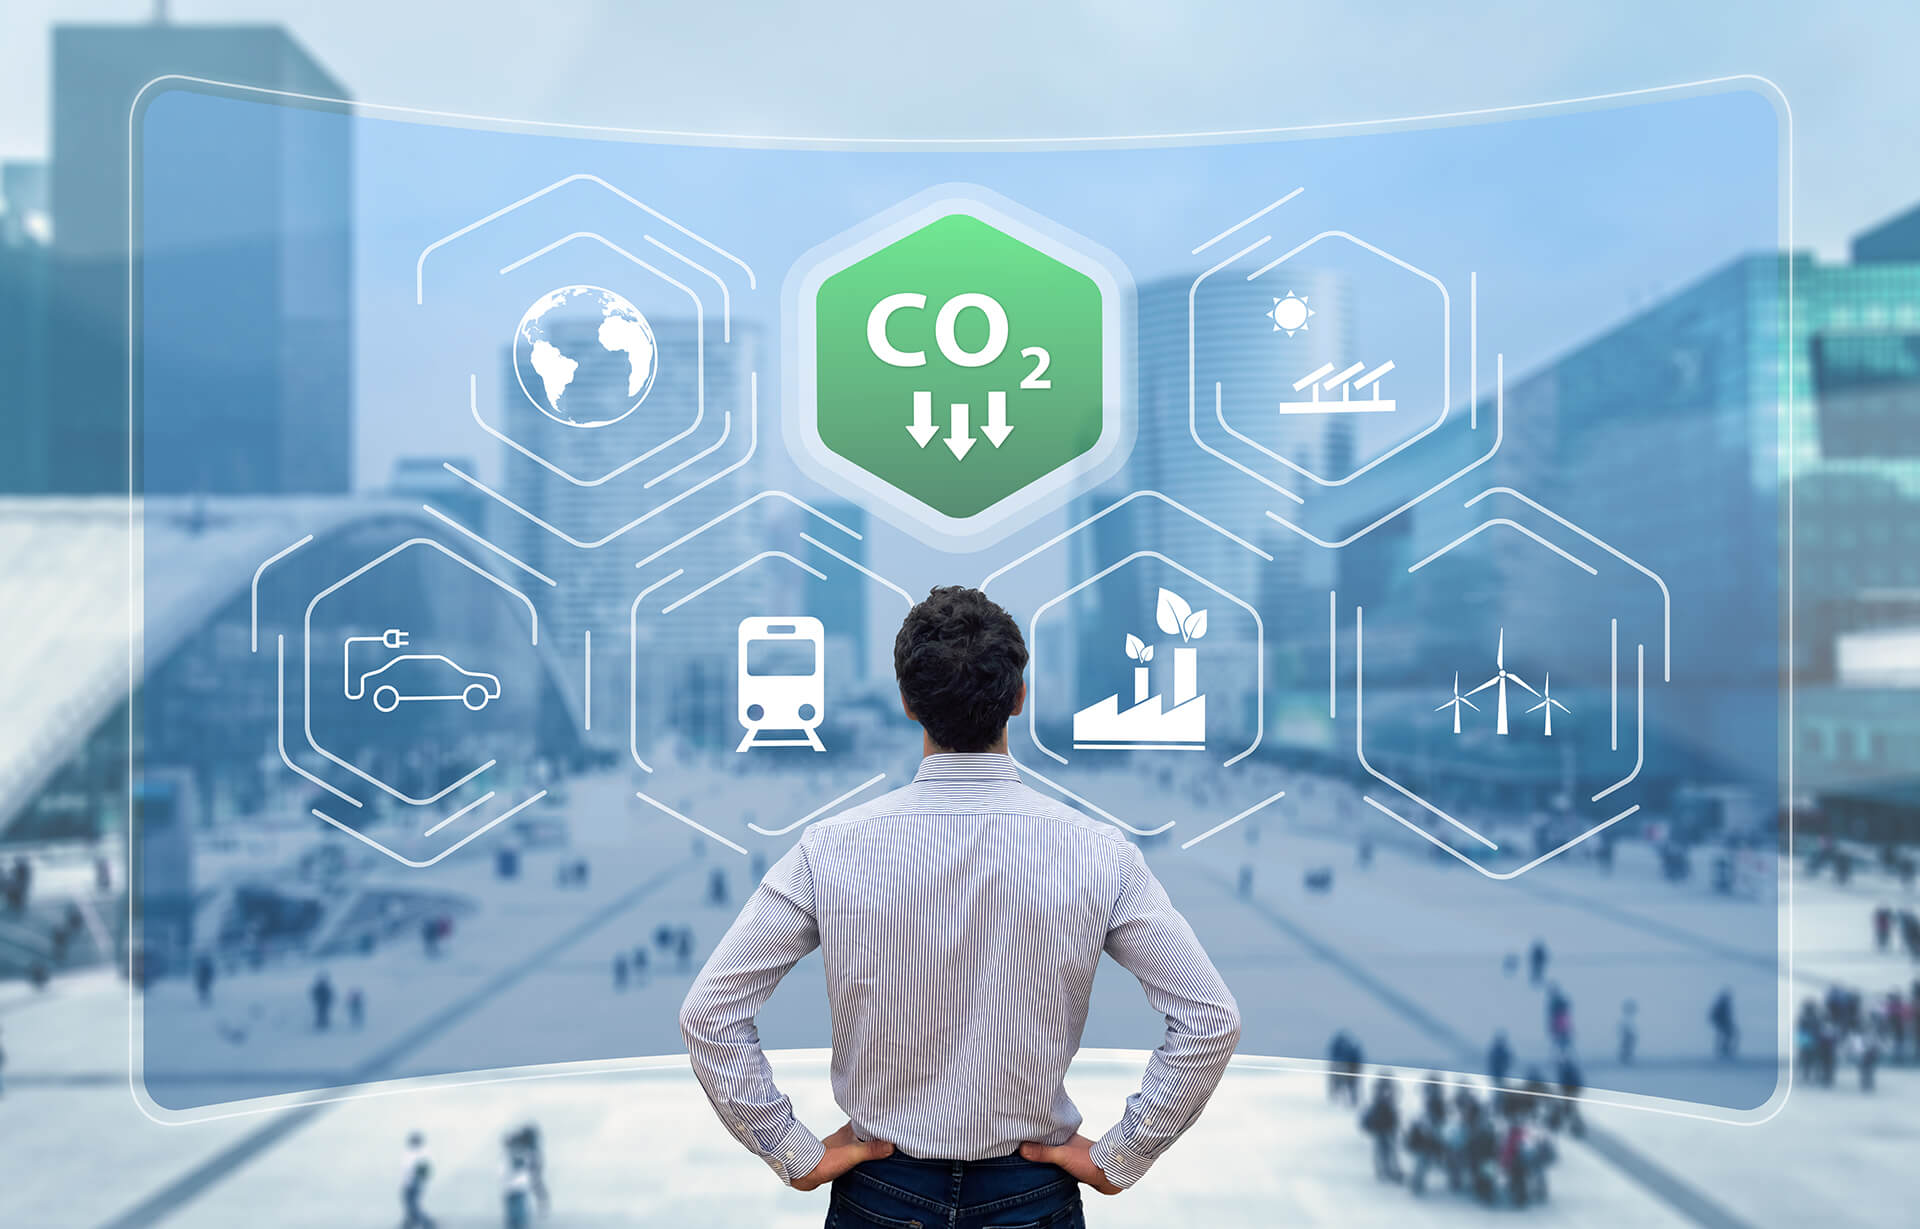 real-time monitoring platform for carbon footprint and emissions measurement